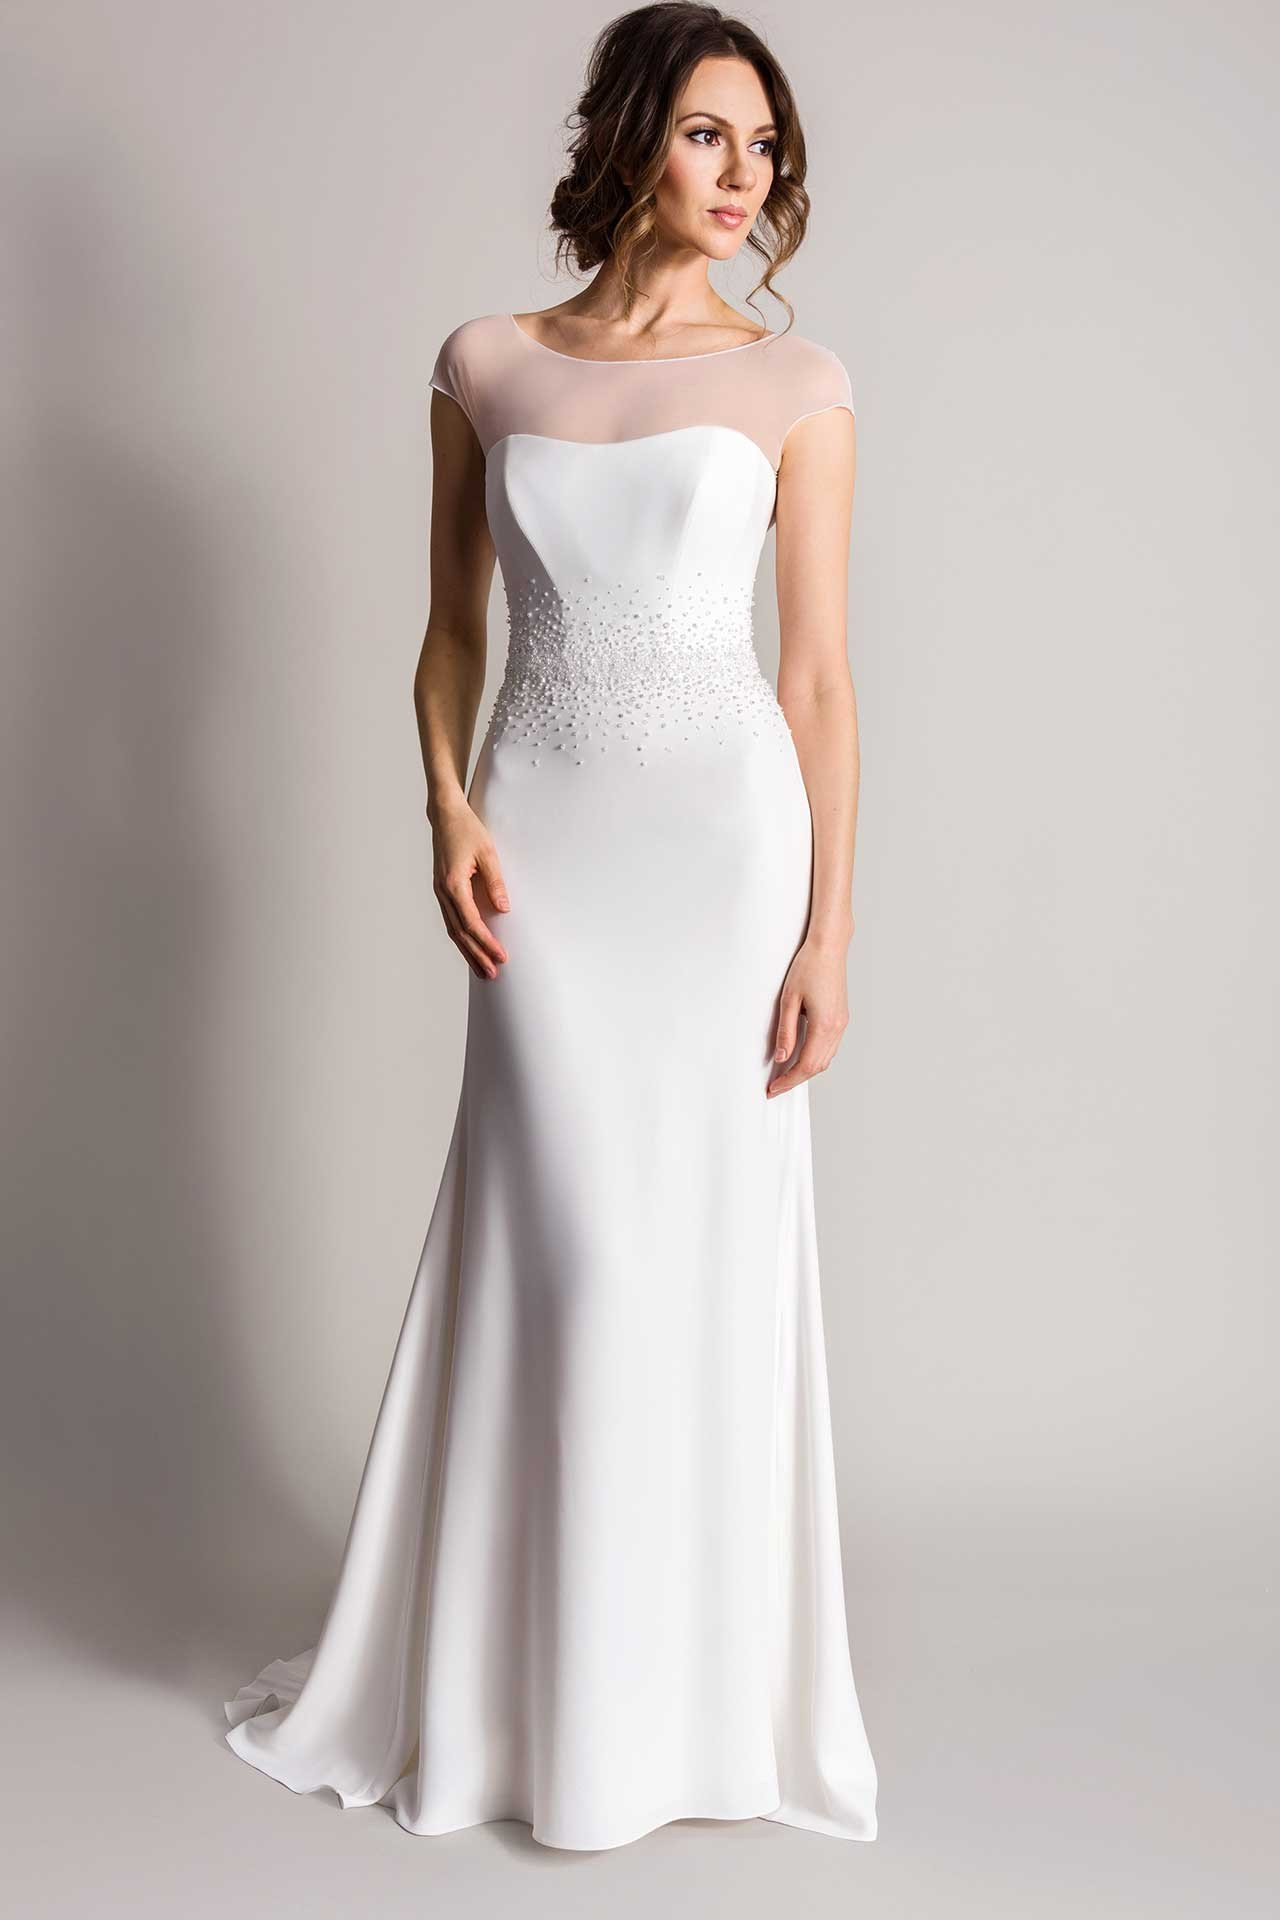 Sleek Wedding Dresses
 Sleek And Minimalist Wedding Dresses For Modern Brides